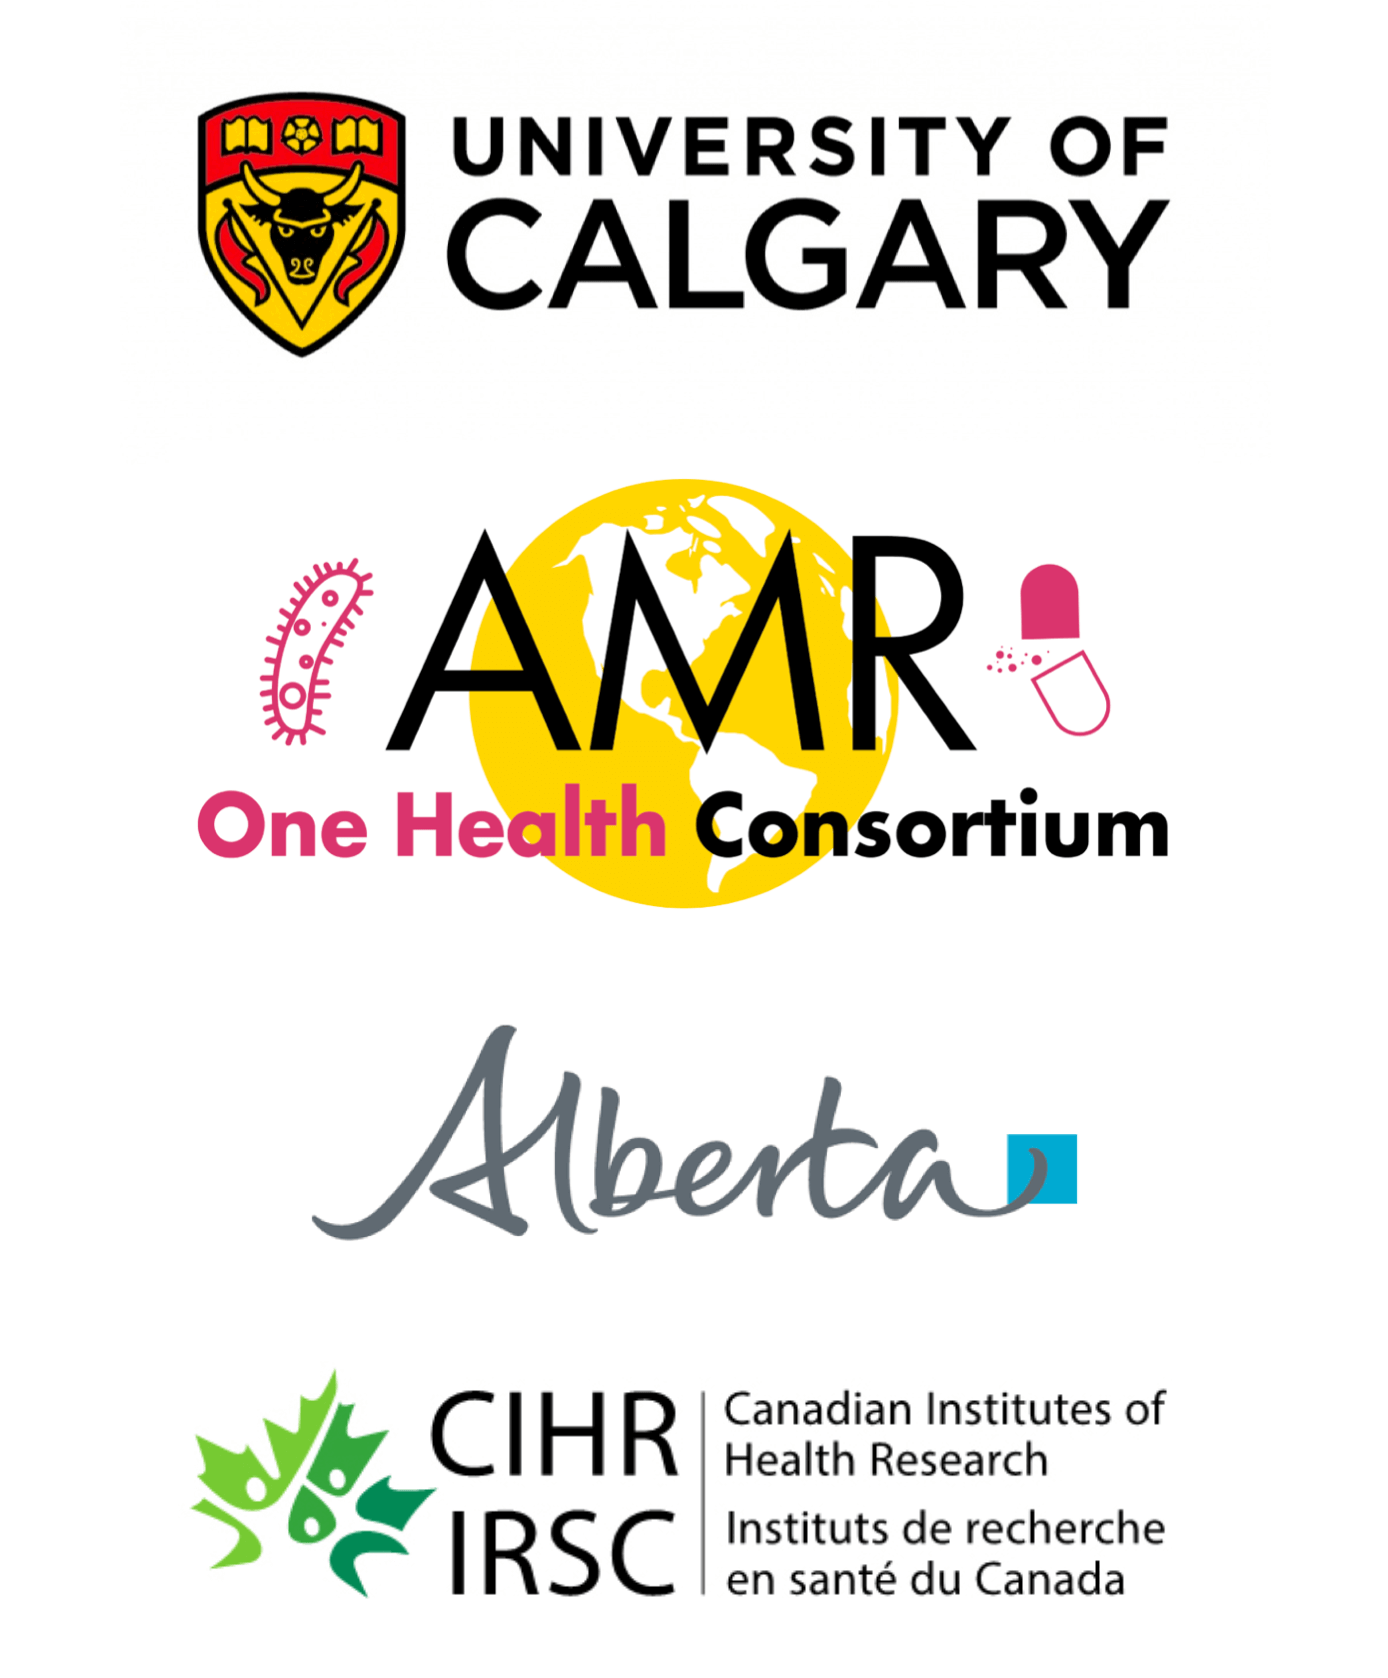 One Health Consortium, University of Calgary